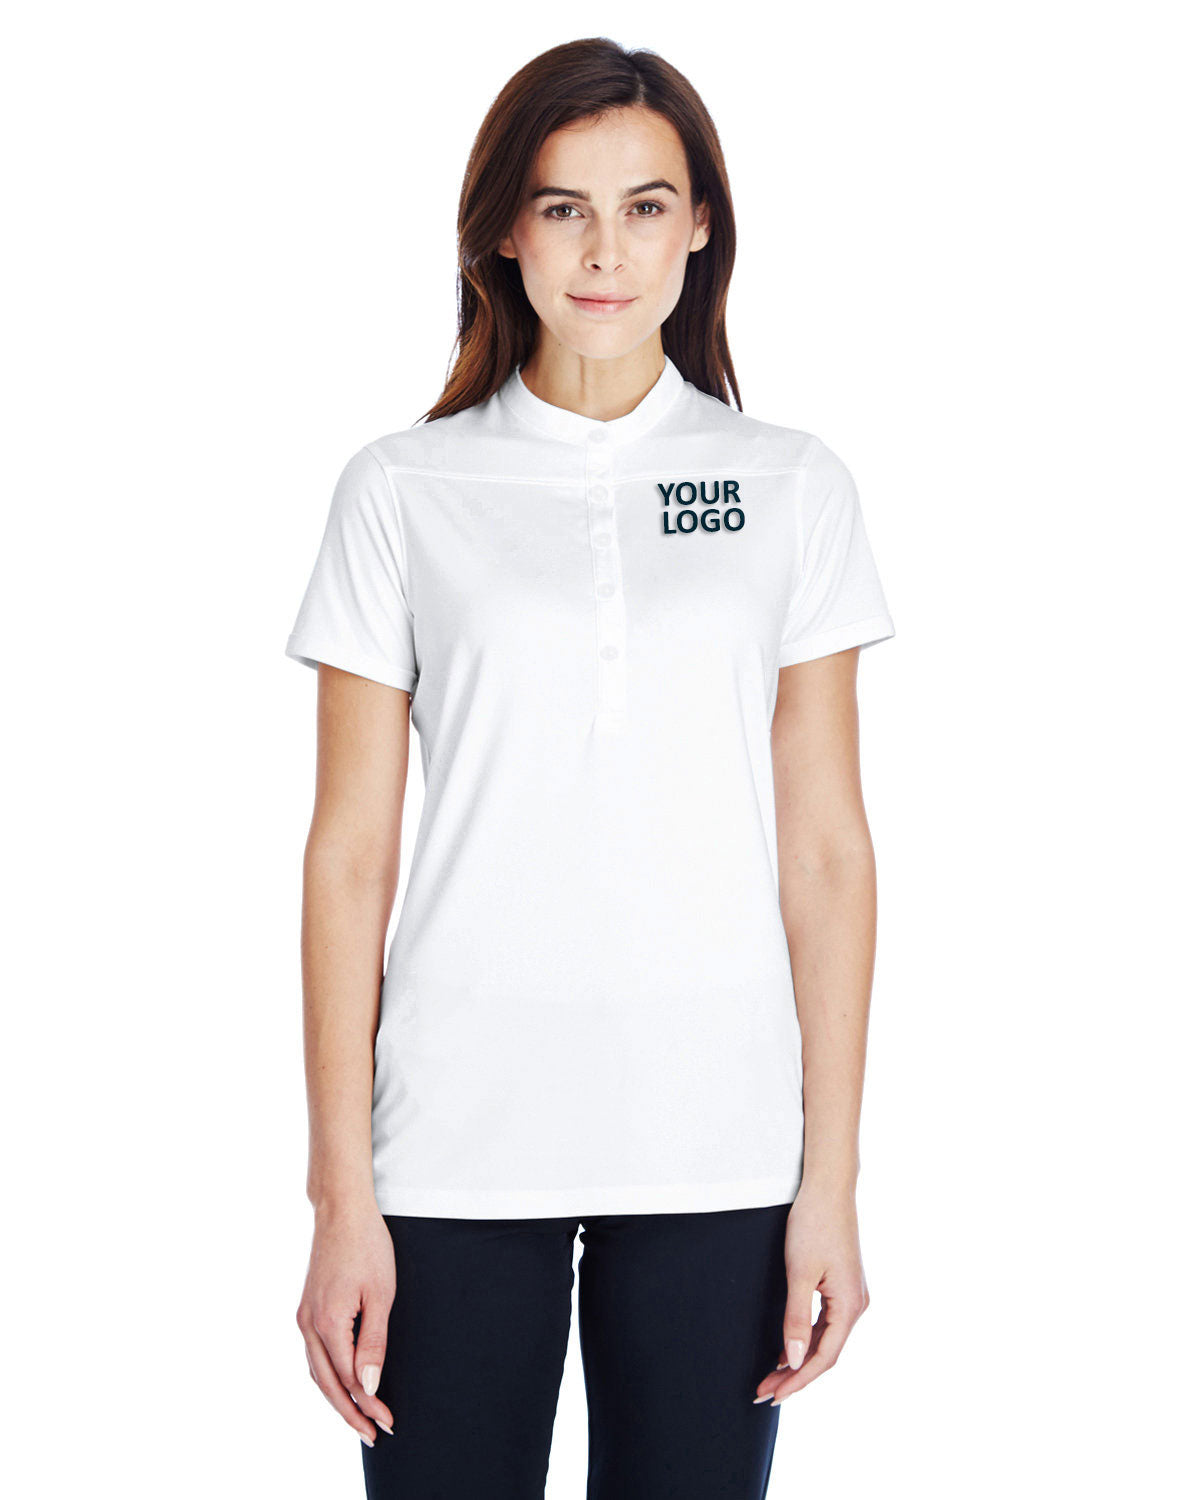 Under Armour White/ Graphite 1317218 polo shirts custom logo